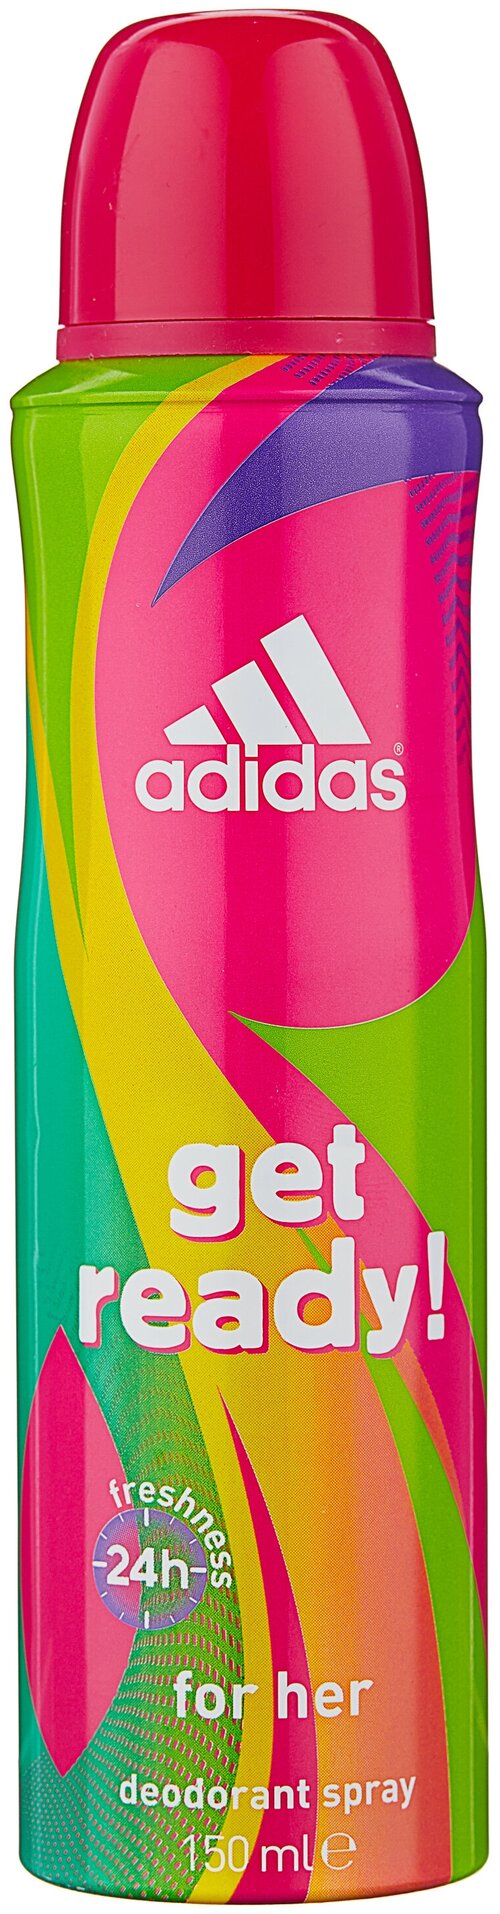 Adidas Дезодорант Get ready!, спрей, 150 мл